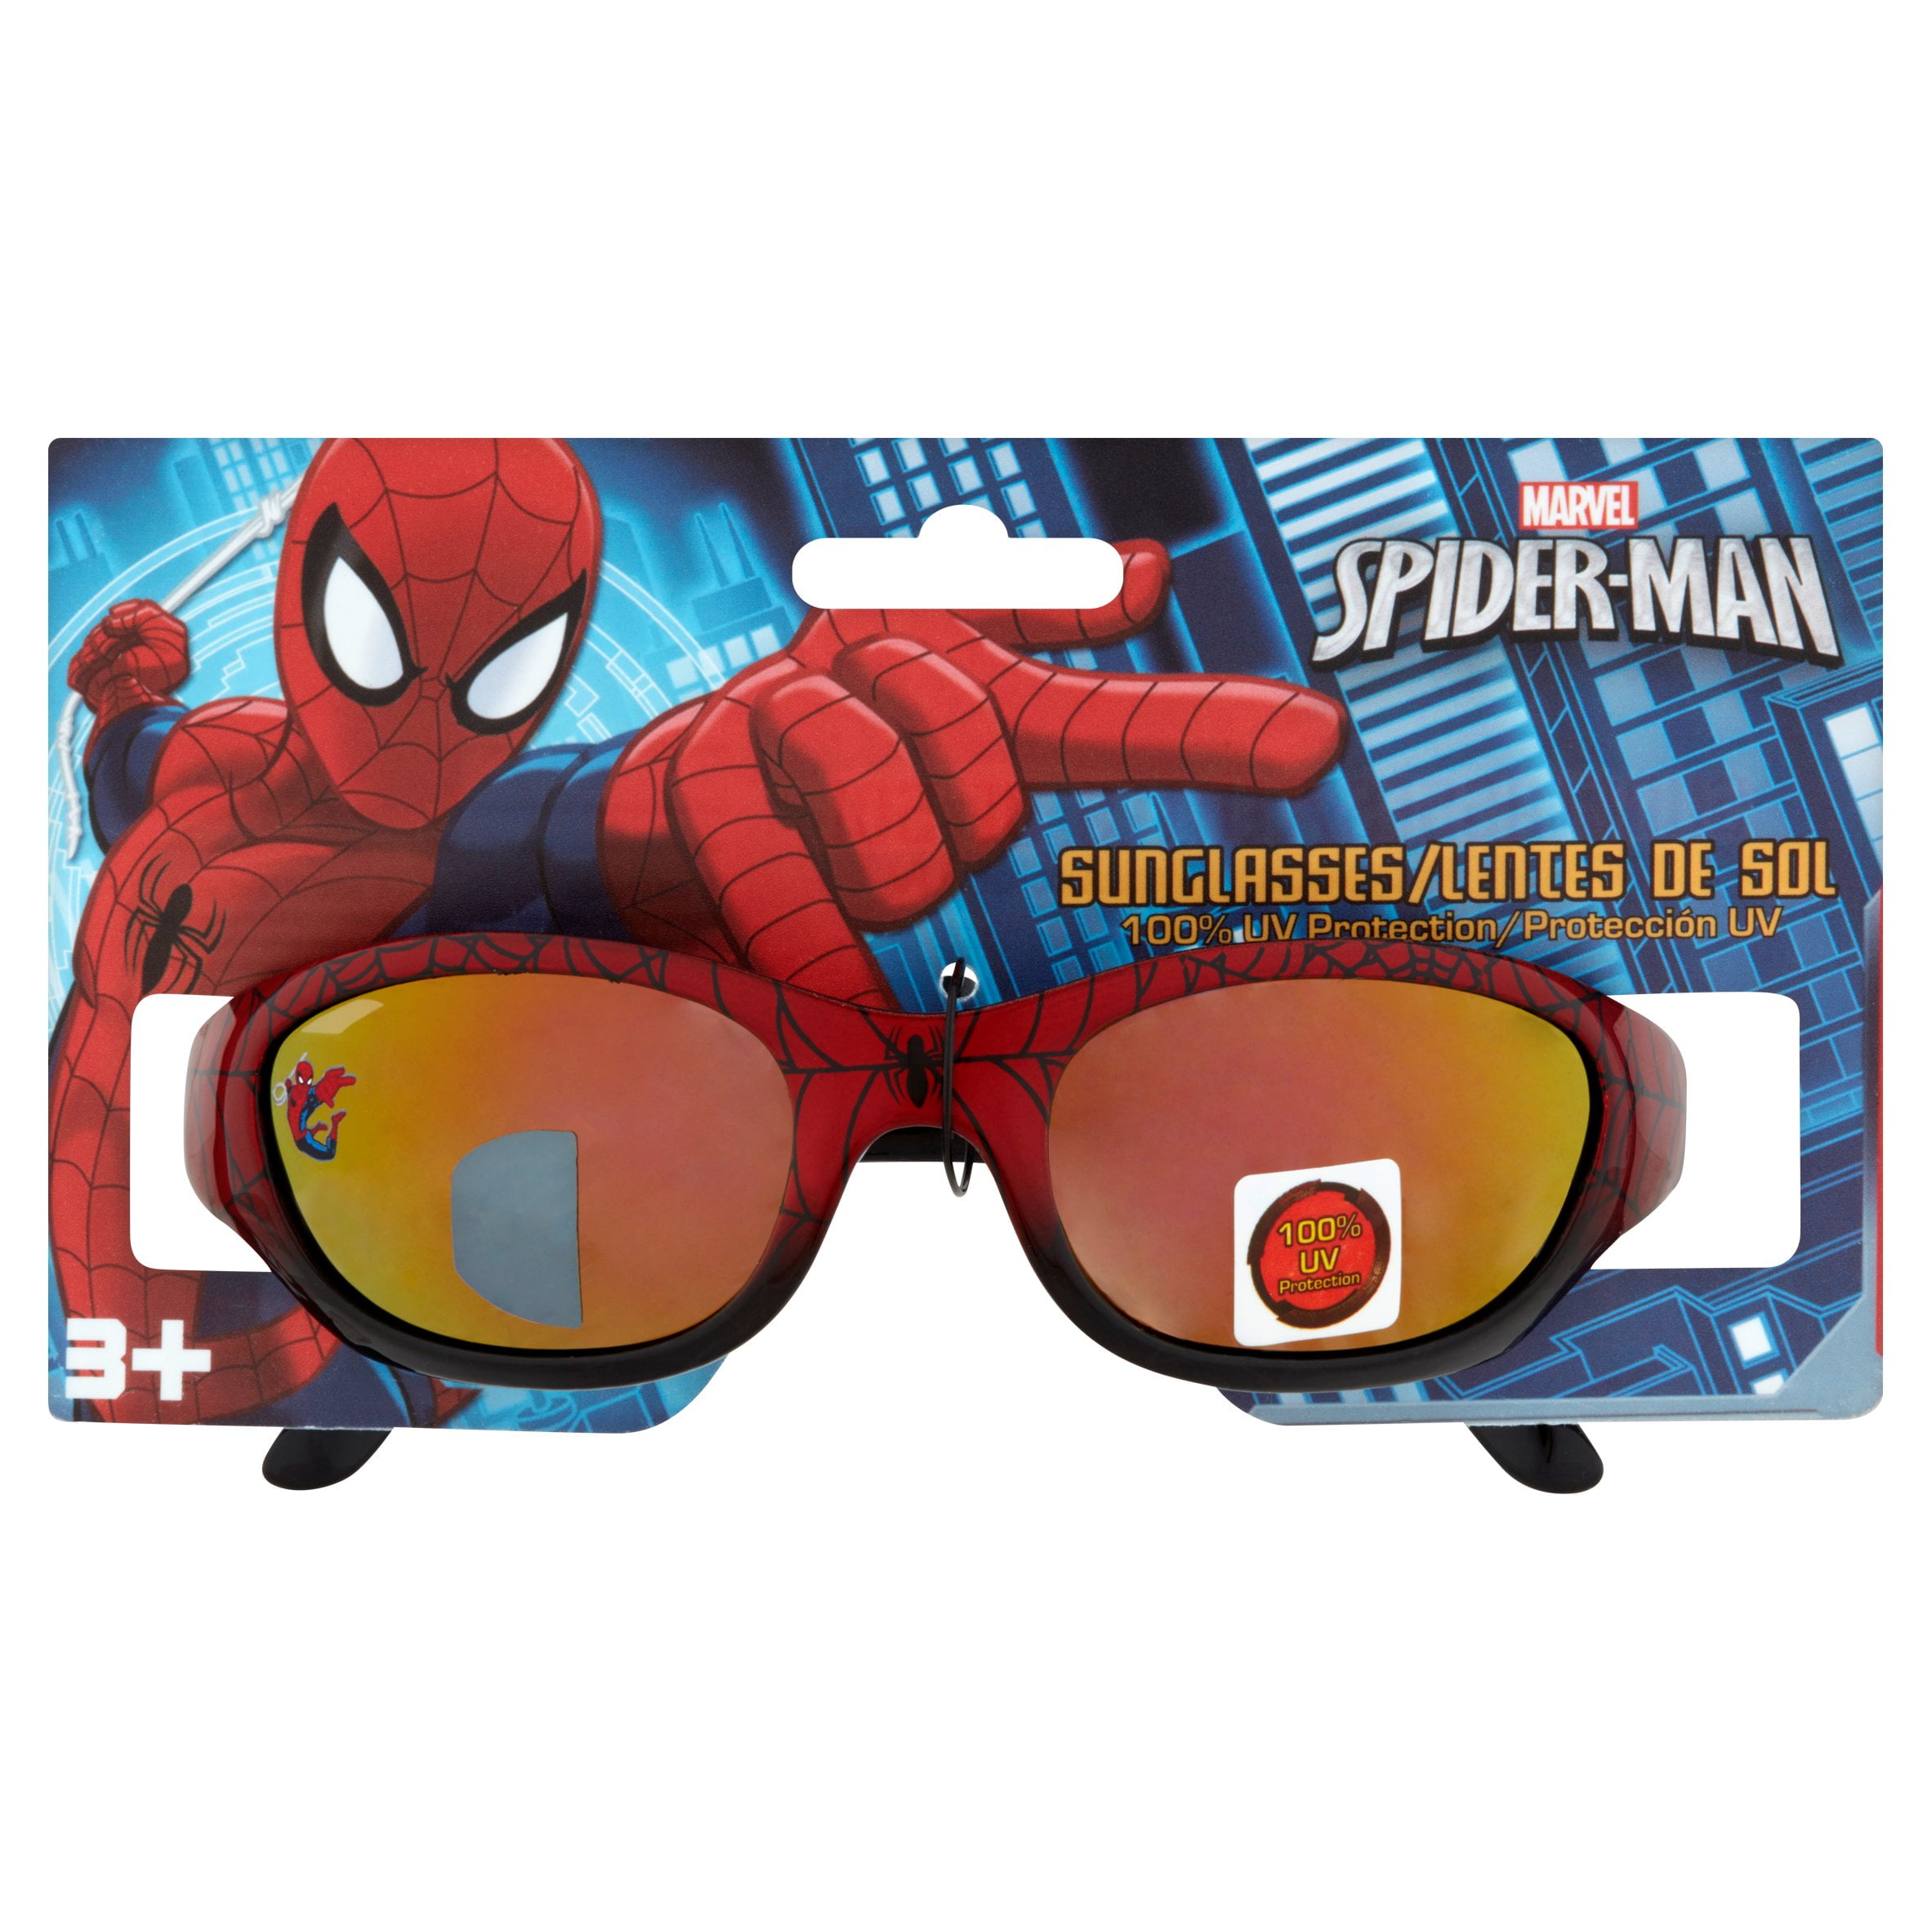 100% UV protection new marvel kids spiderman sunglasses 